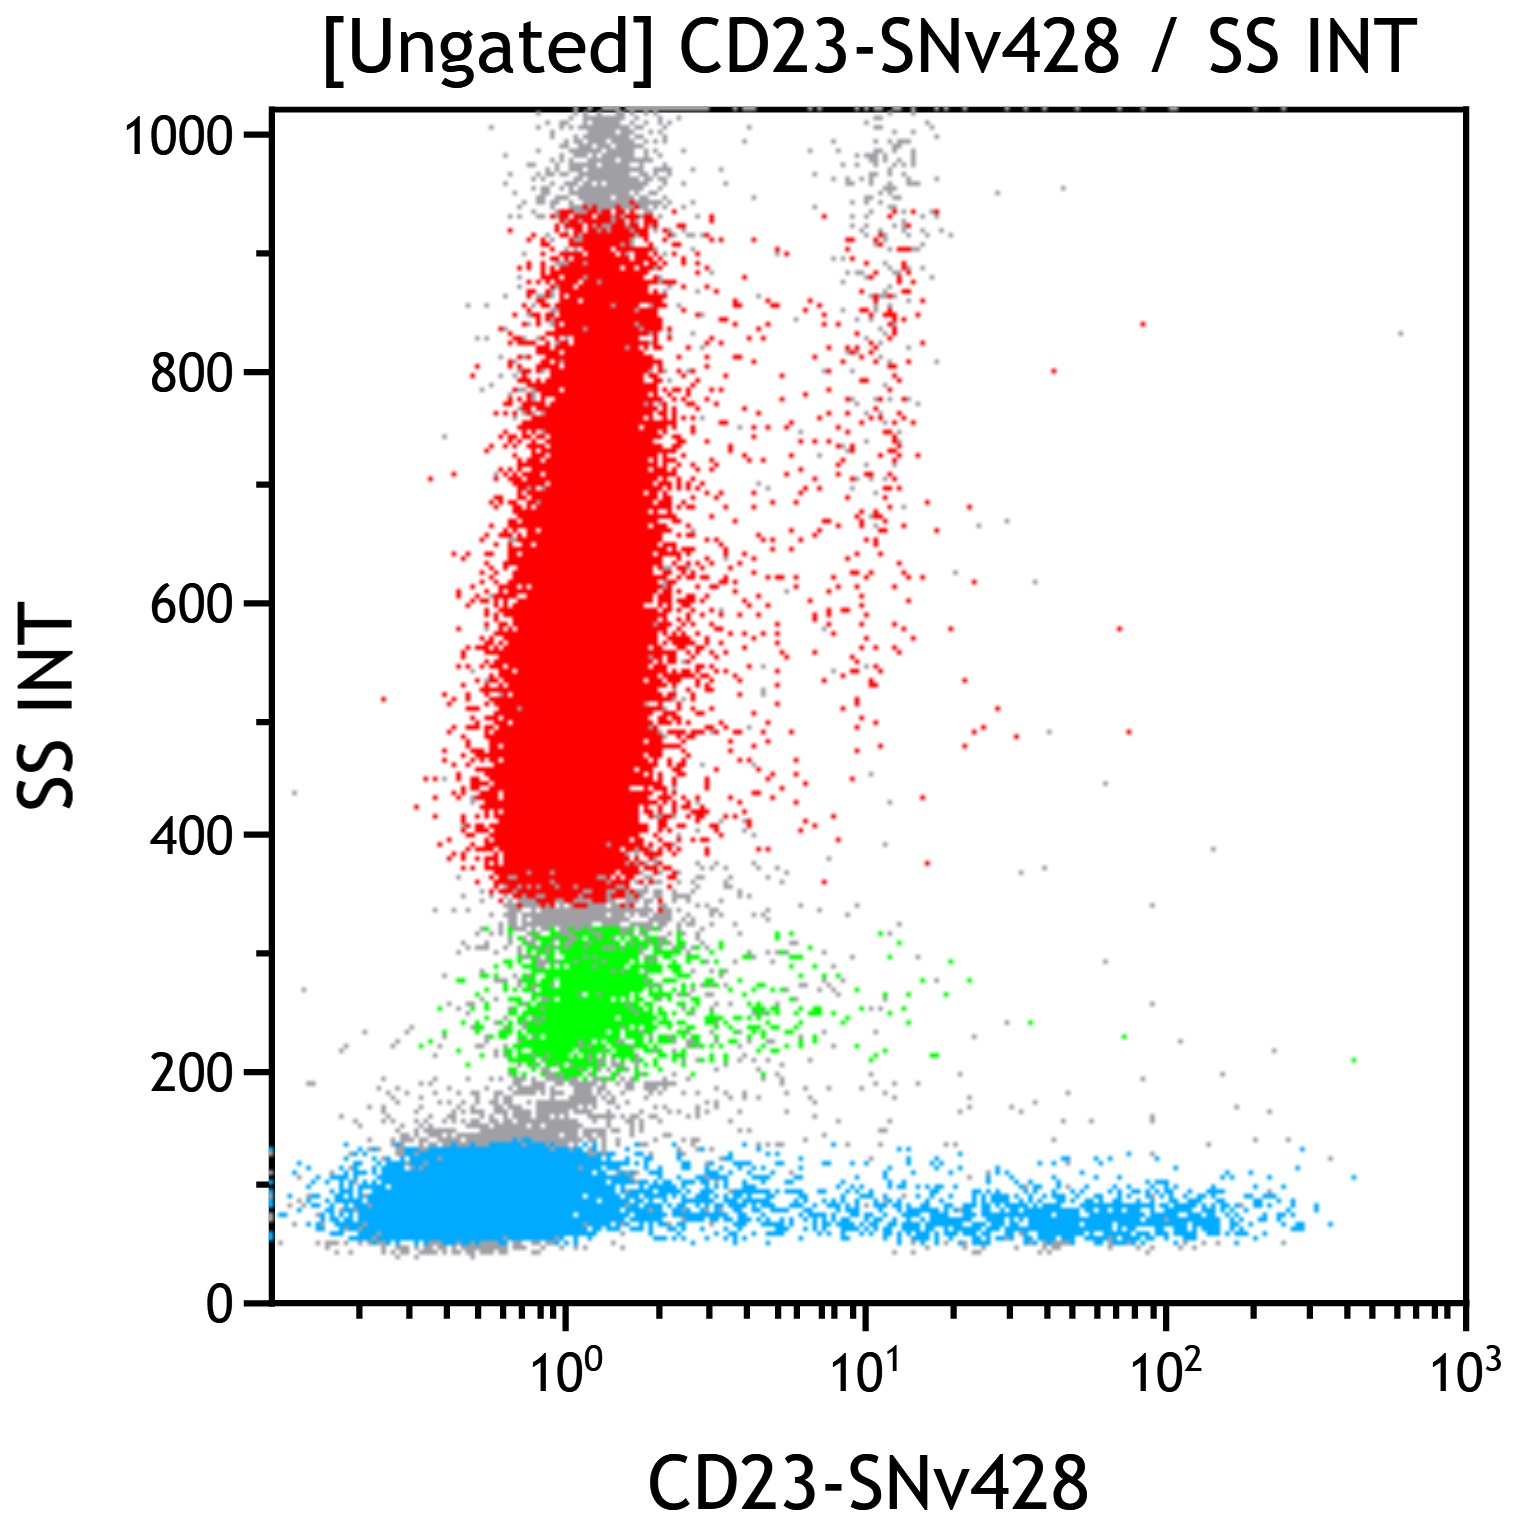 CD23 SNv428 C76832 dotplot